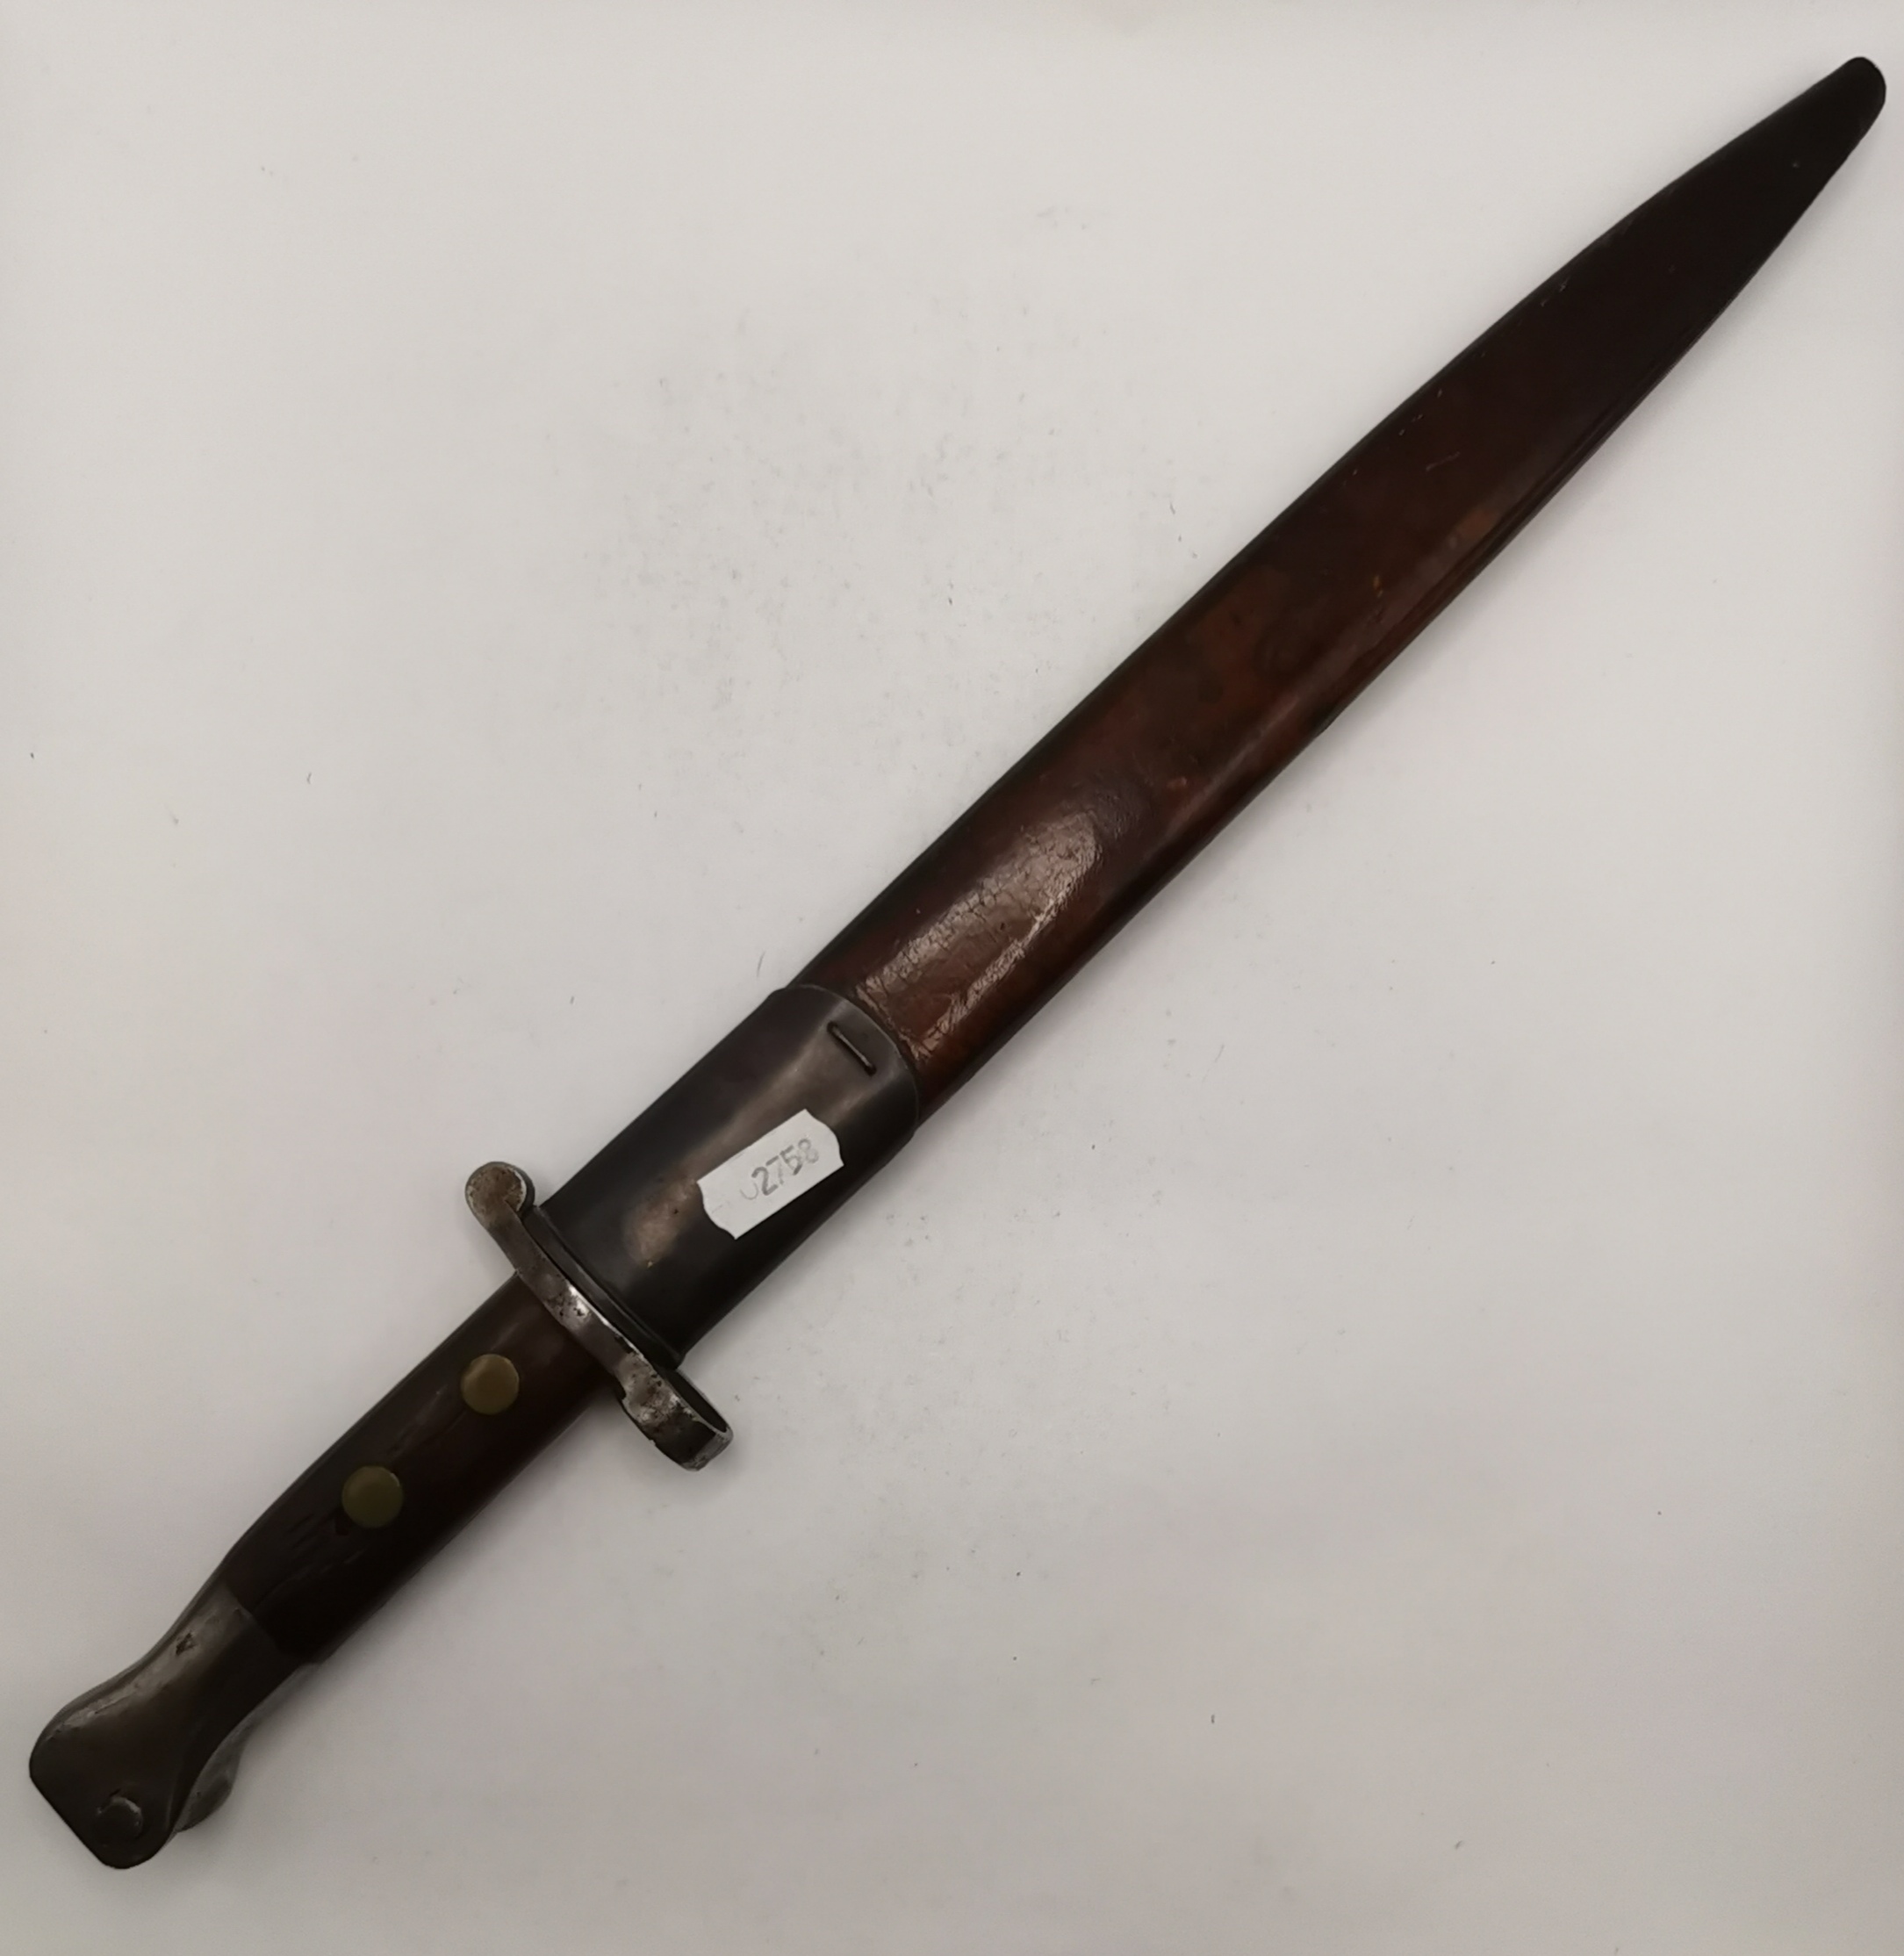 An Enfield sword bayonet, pattern 1907